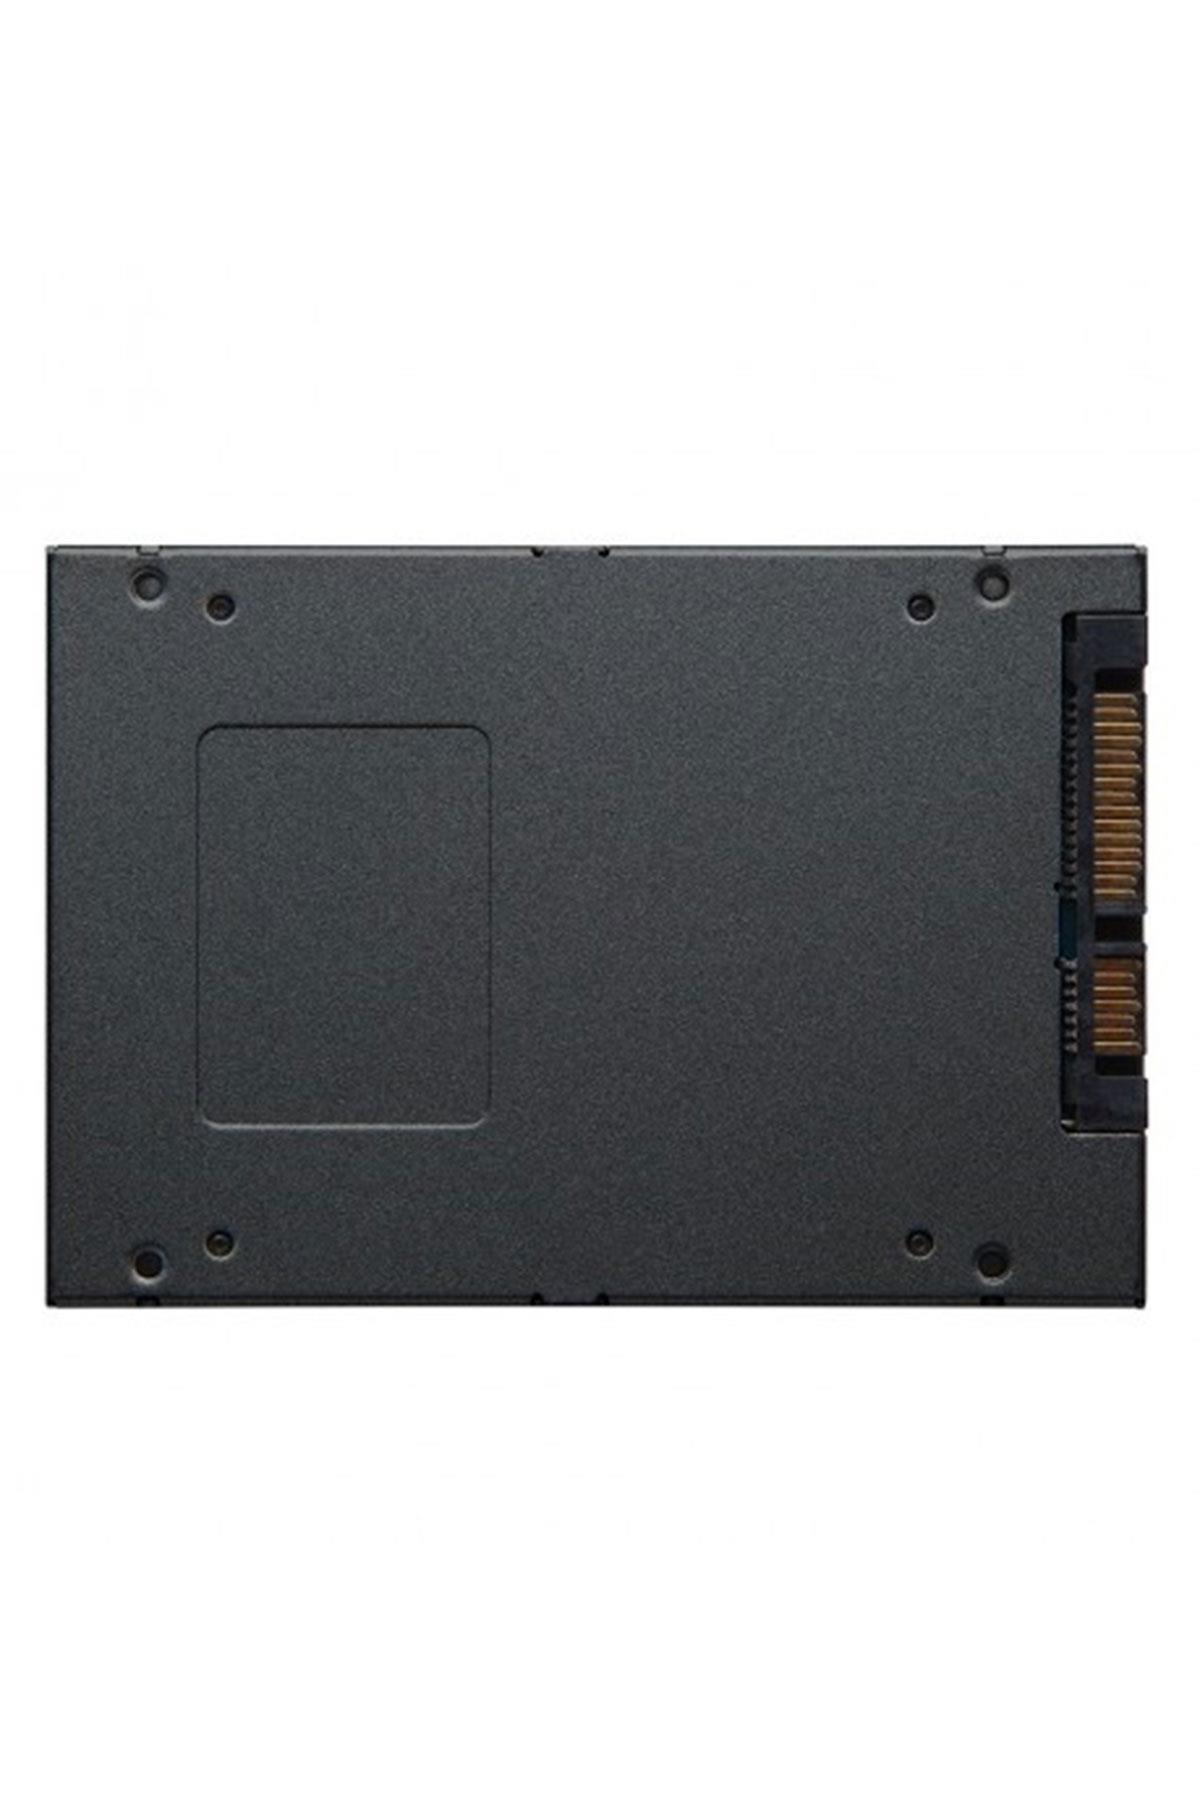 Kingston 240GB A400 Okuma 500MB-Yazma 350MB SATA SSD (SA400S37/240G)  KINGSTON SSD Disk